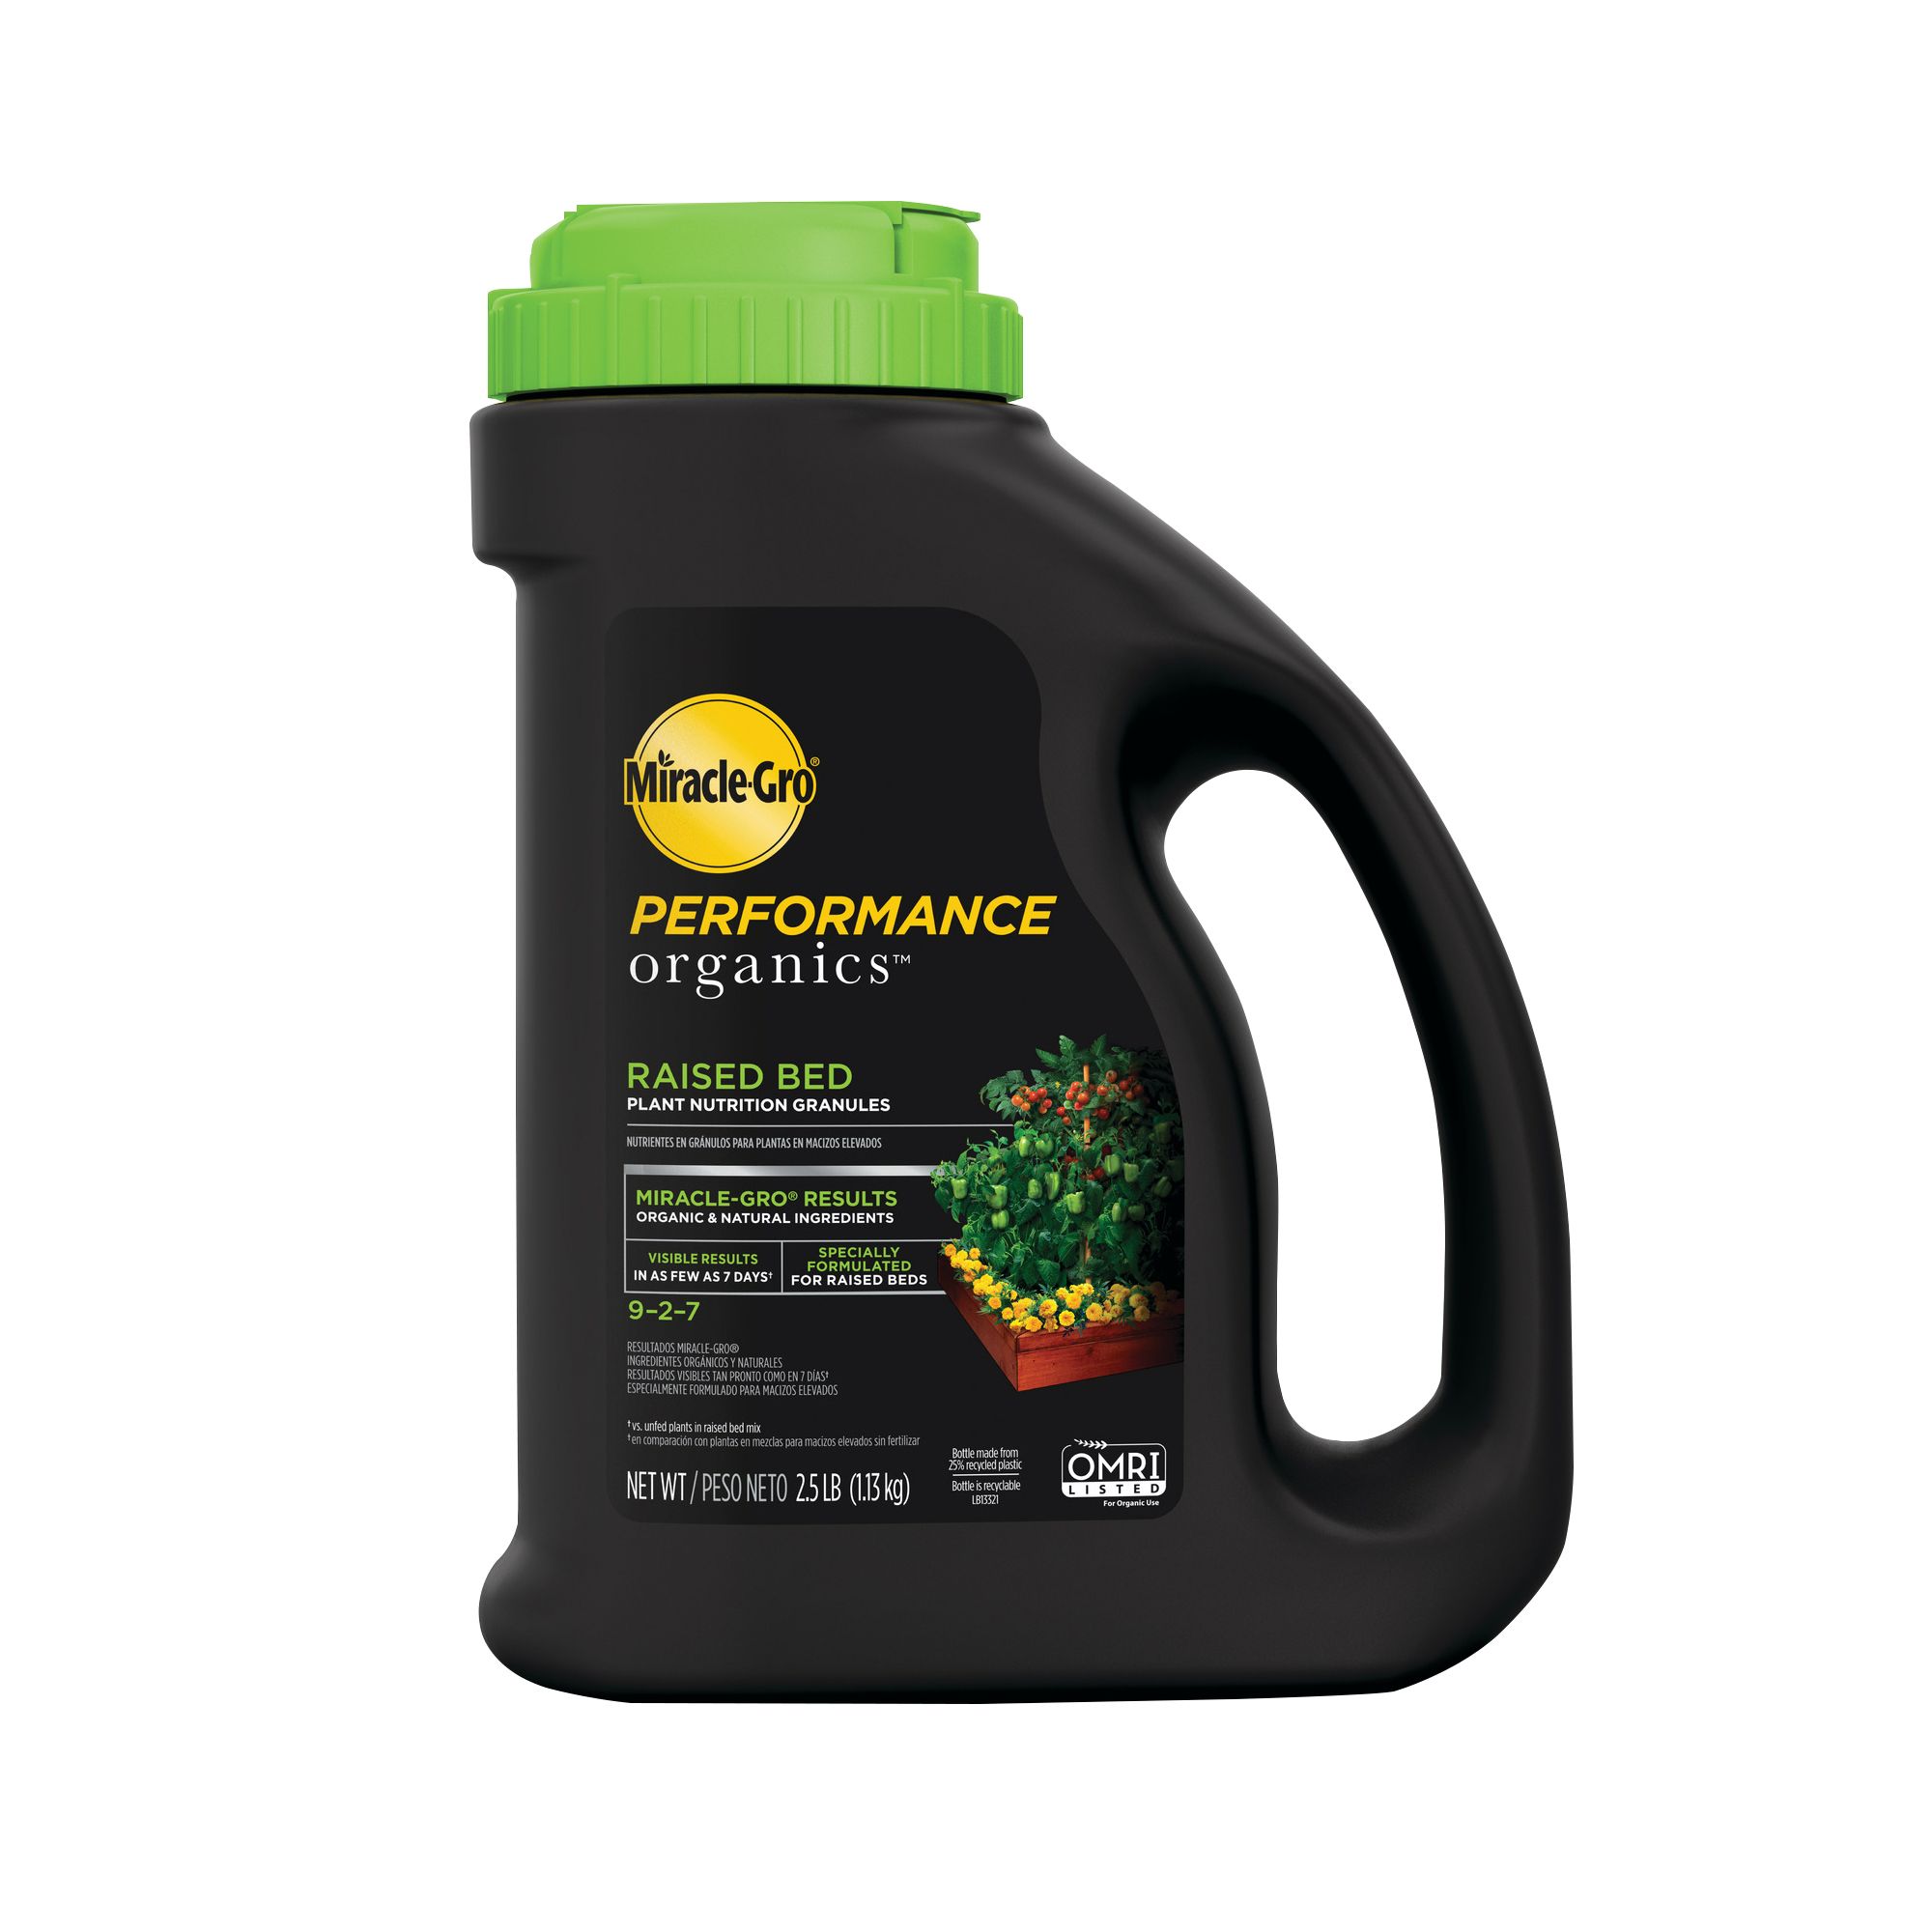 Miracle-Gro Performance Organics Raised Bed Plant Nutrition Granules, 2.5 lbs.